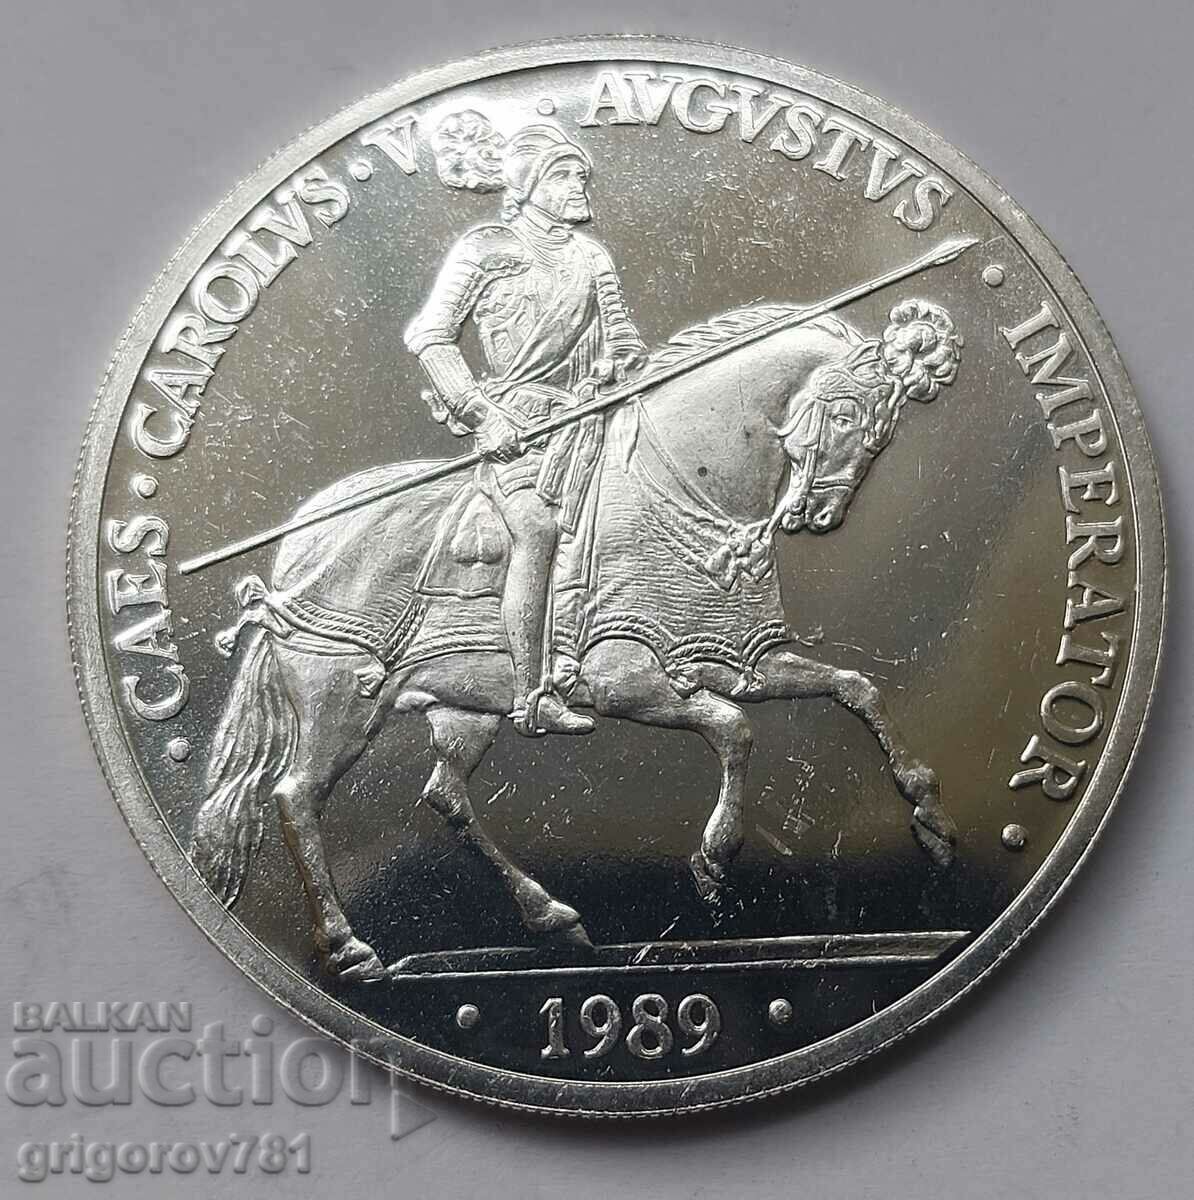 5 ECU Argint Spania 1989 - Moneda de argint #1